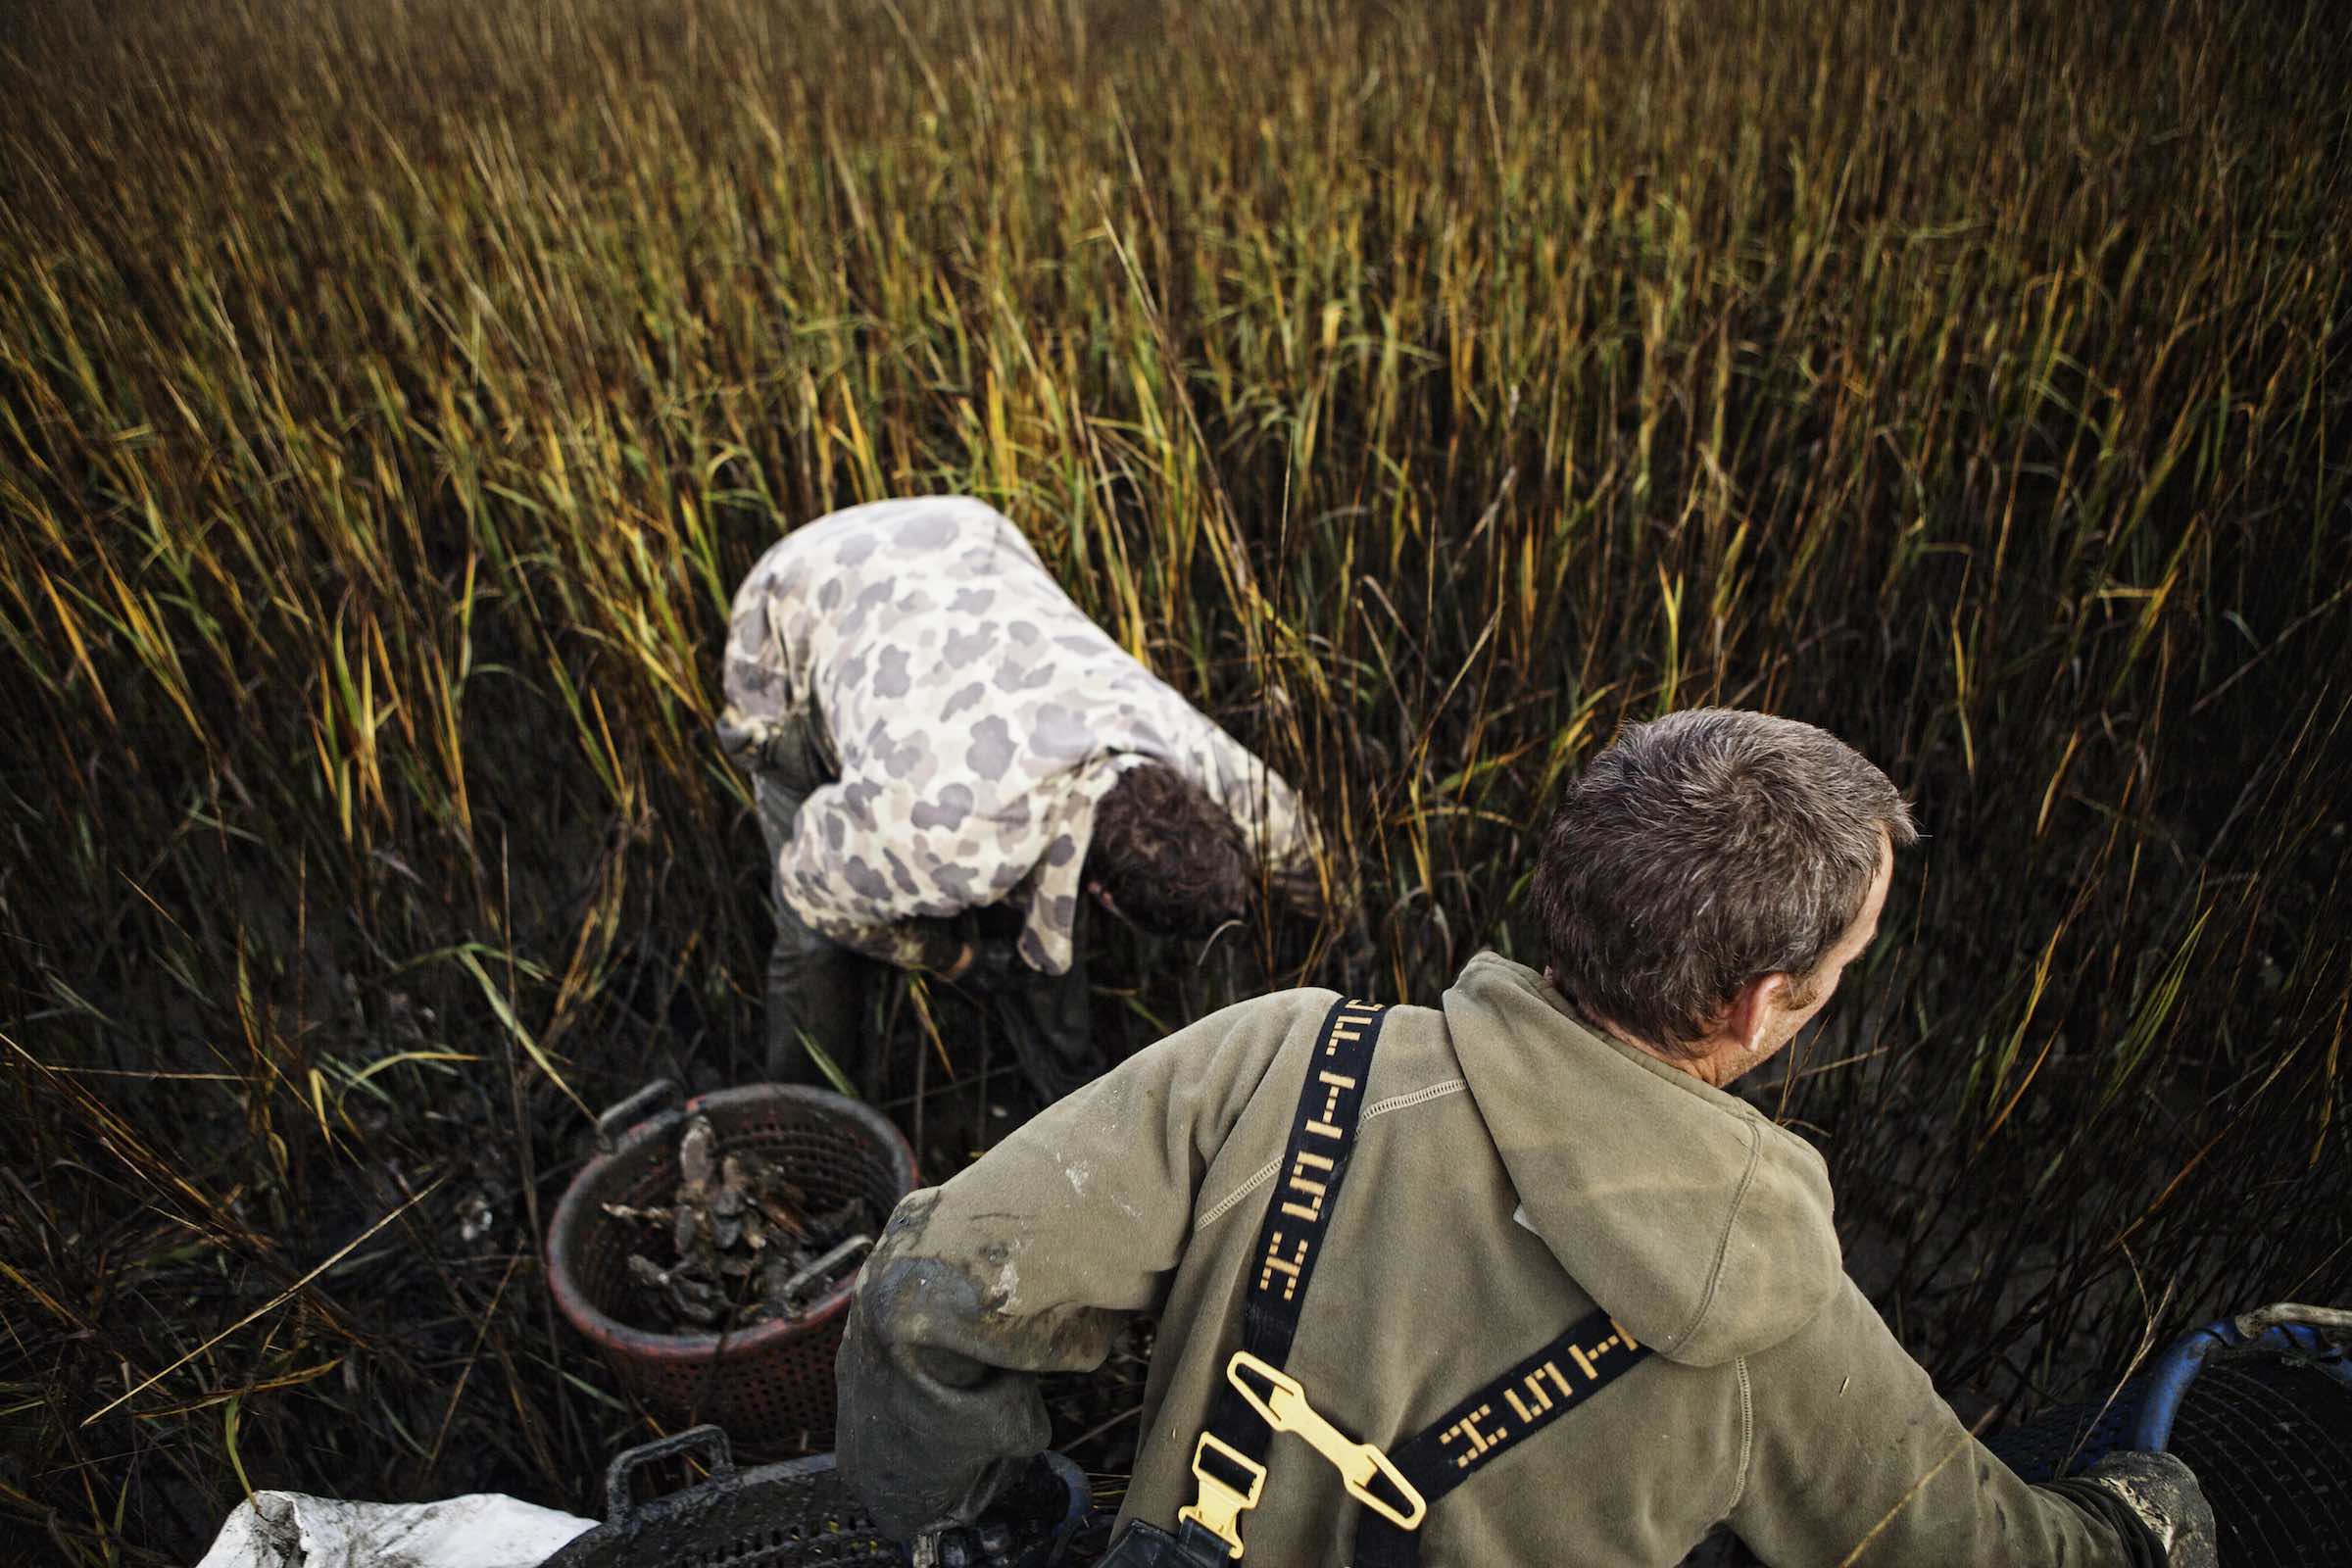 Jody Horton Photography - Fishermen harvesting oysters in marsh grasses. 